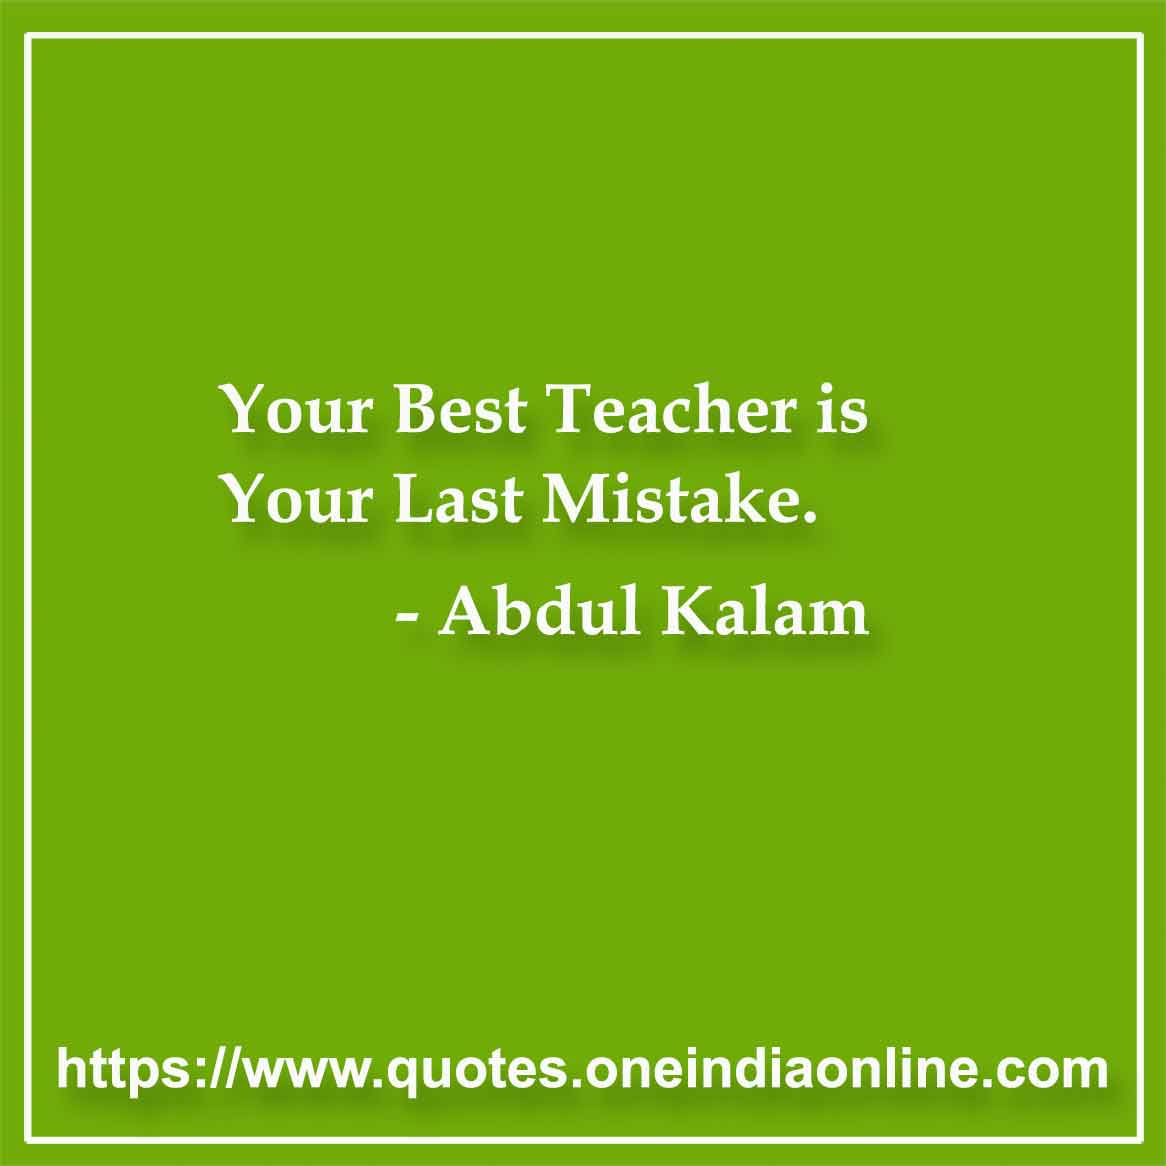 Your Best Teacher is Your Last Mistake.